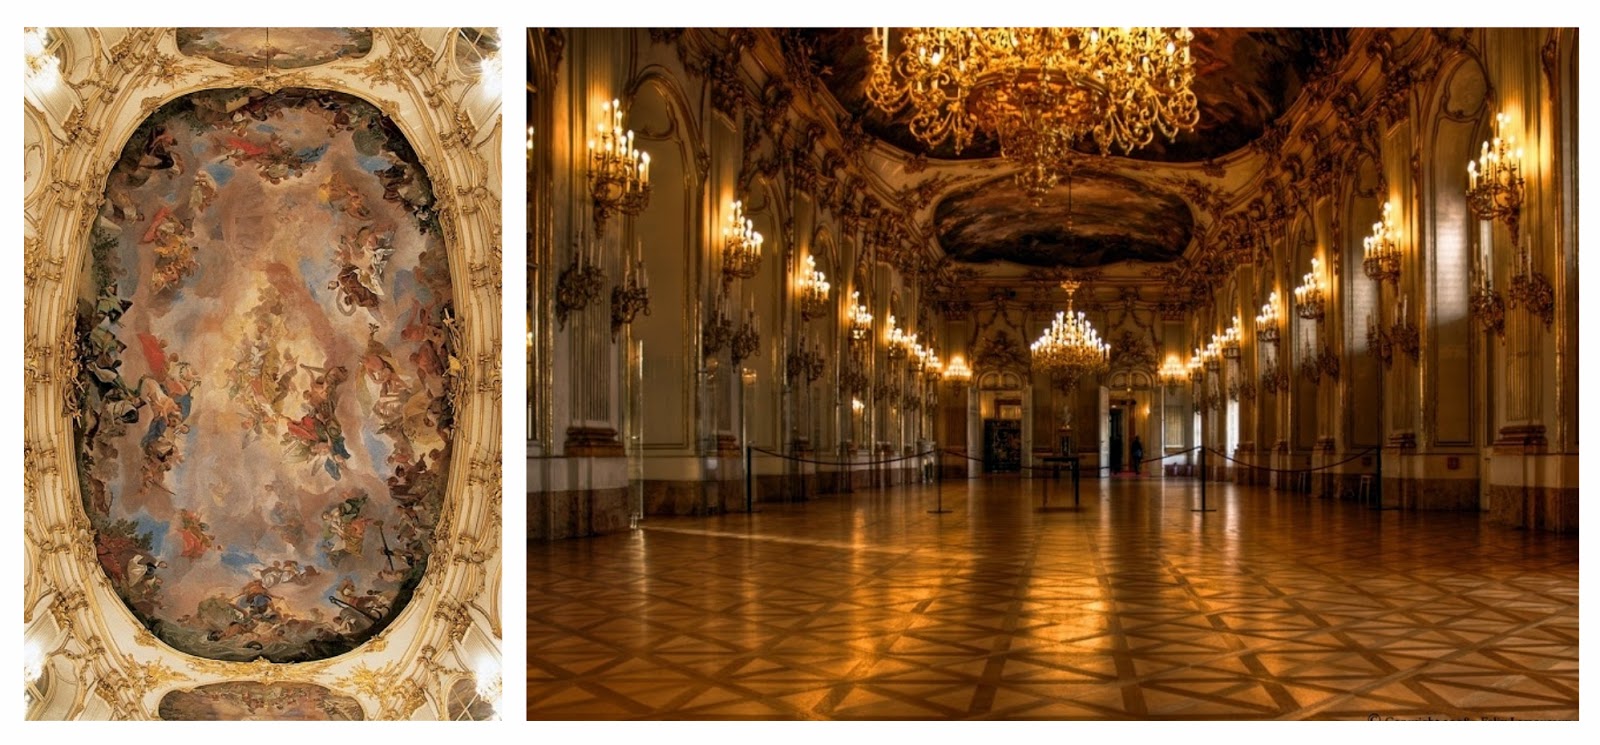 Царский балл. Дворец Шенбрунн бальный зал. Версальский дворец бальный зал. Особняк Хлудова бальный зал. Букингемский дворец бальный зал.